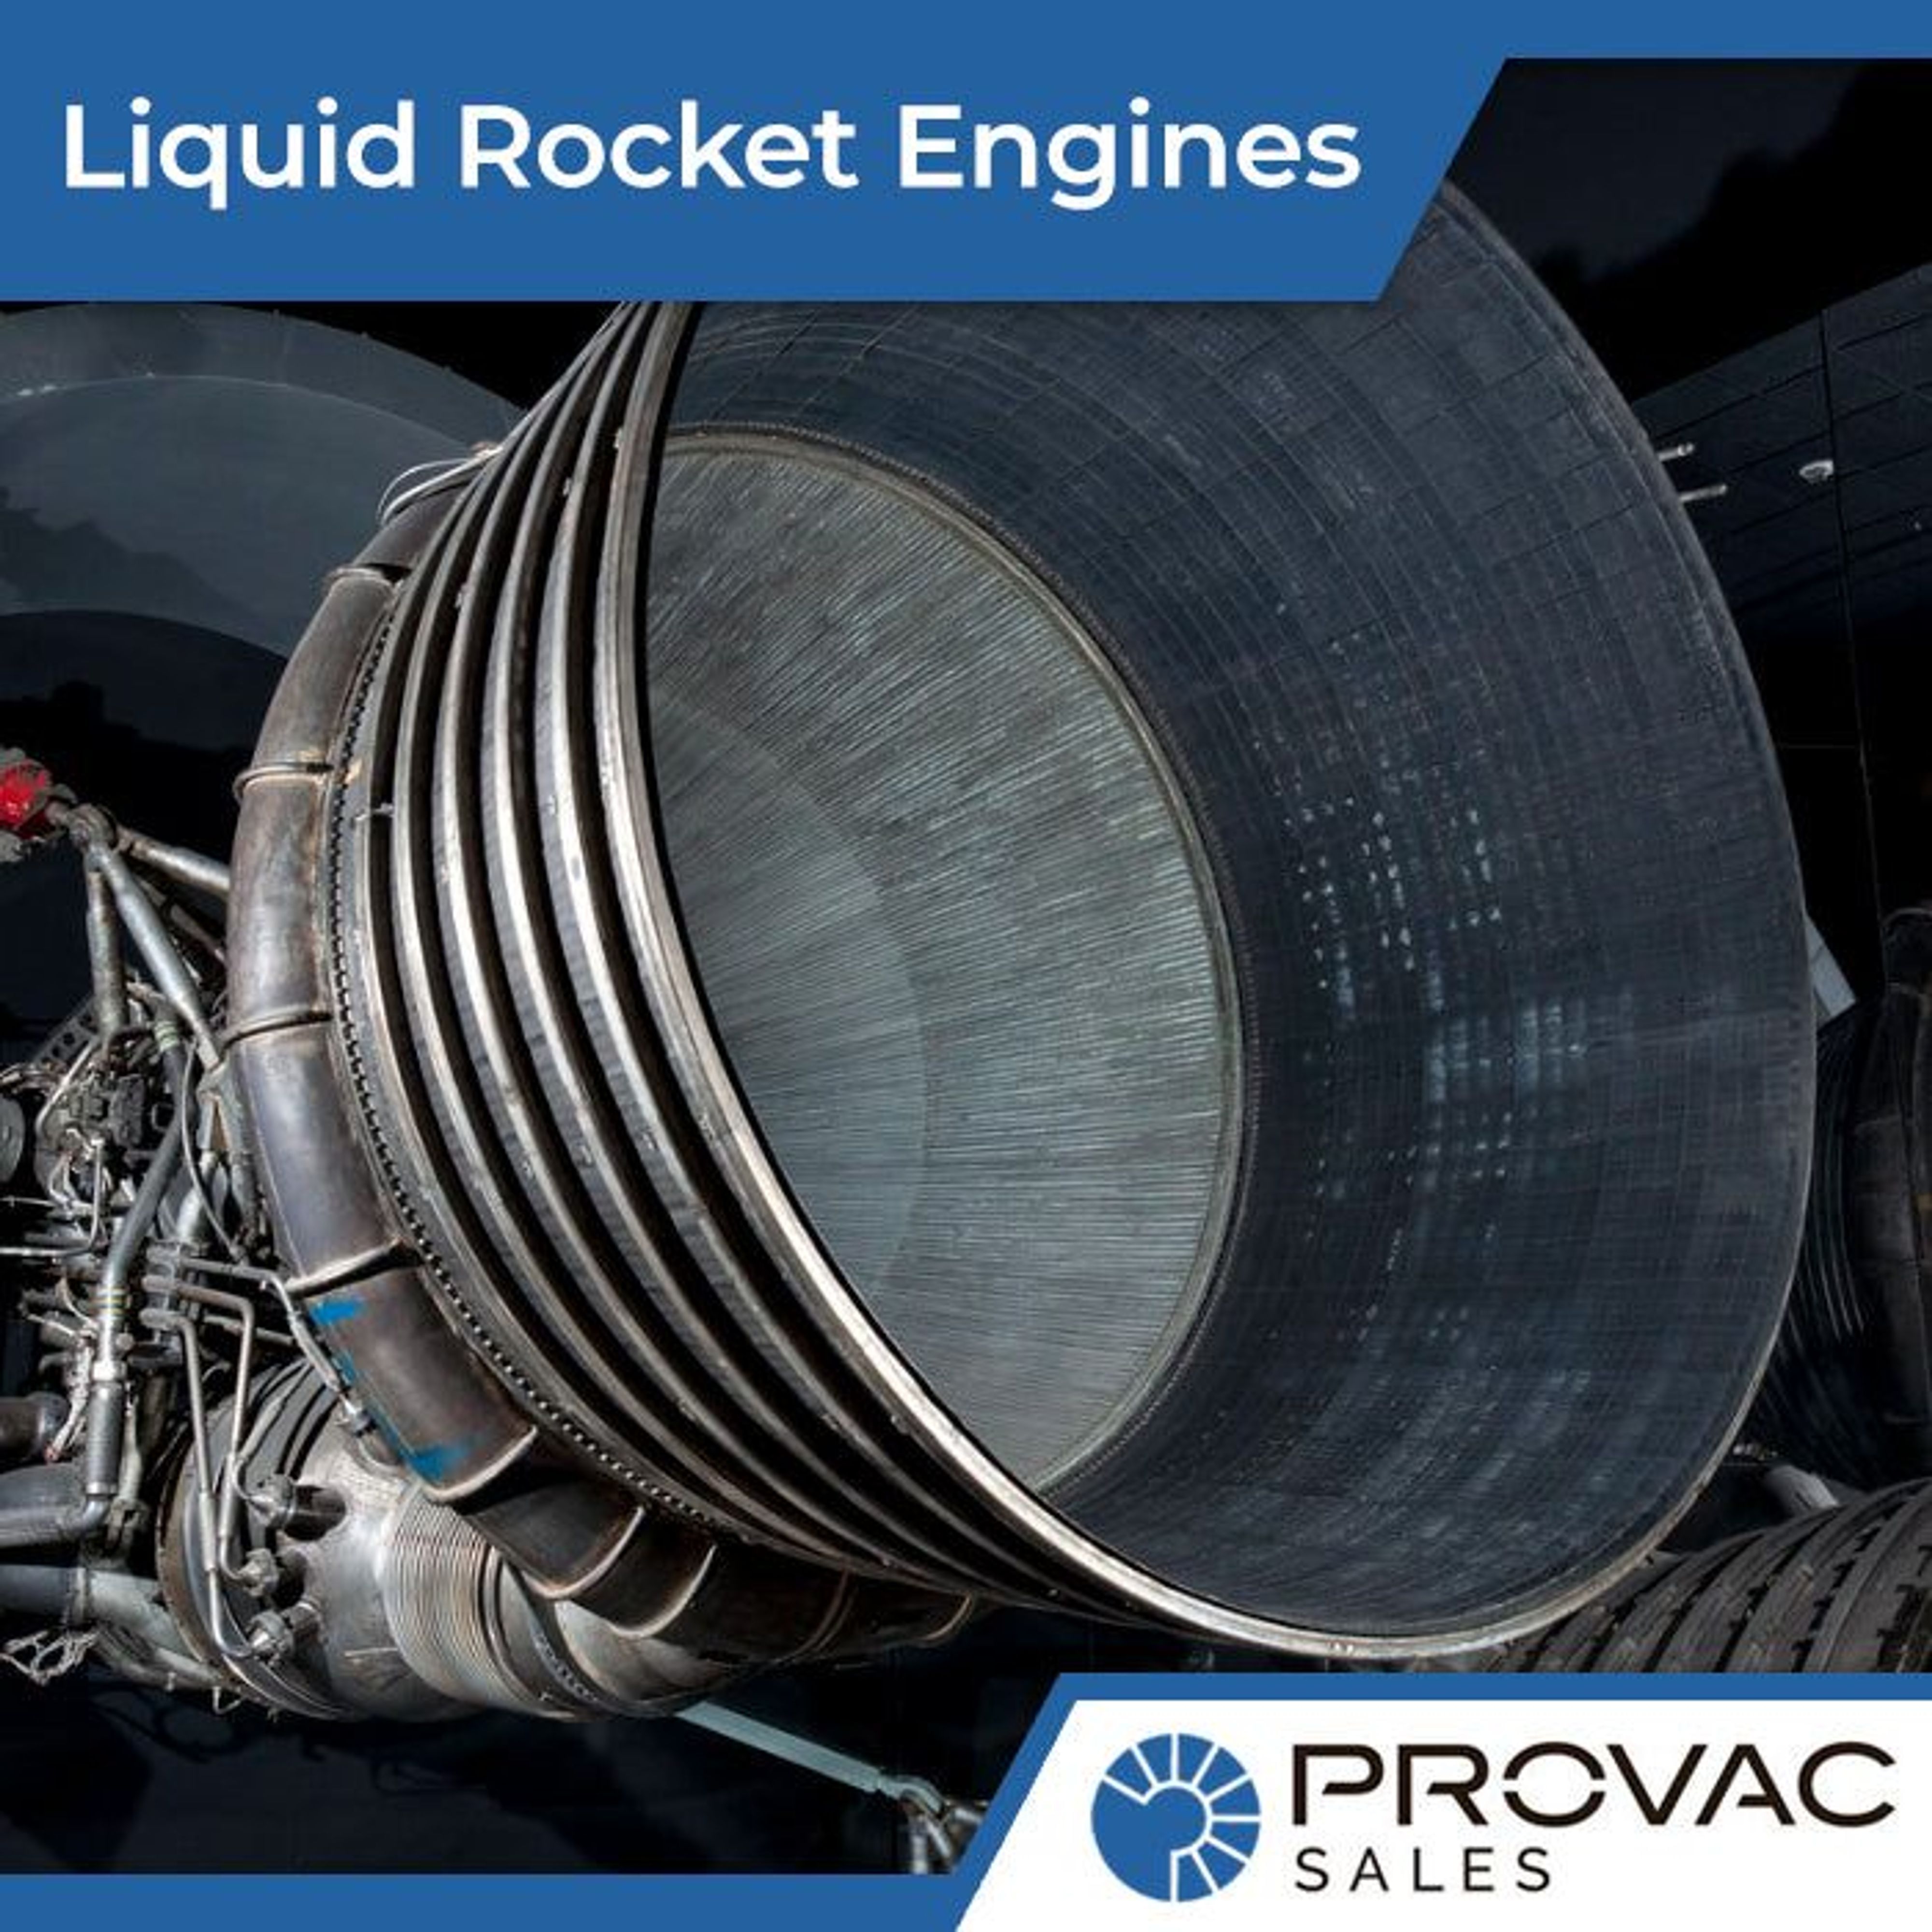 Turbo Pumps for Liquid Rocket Engines Background